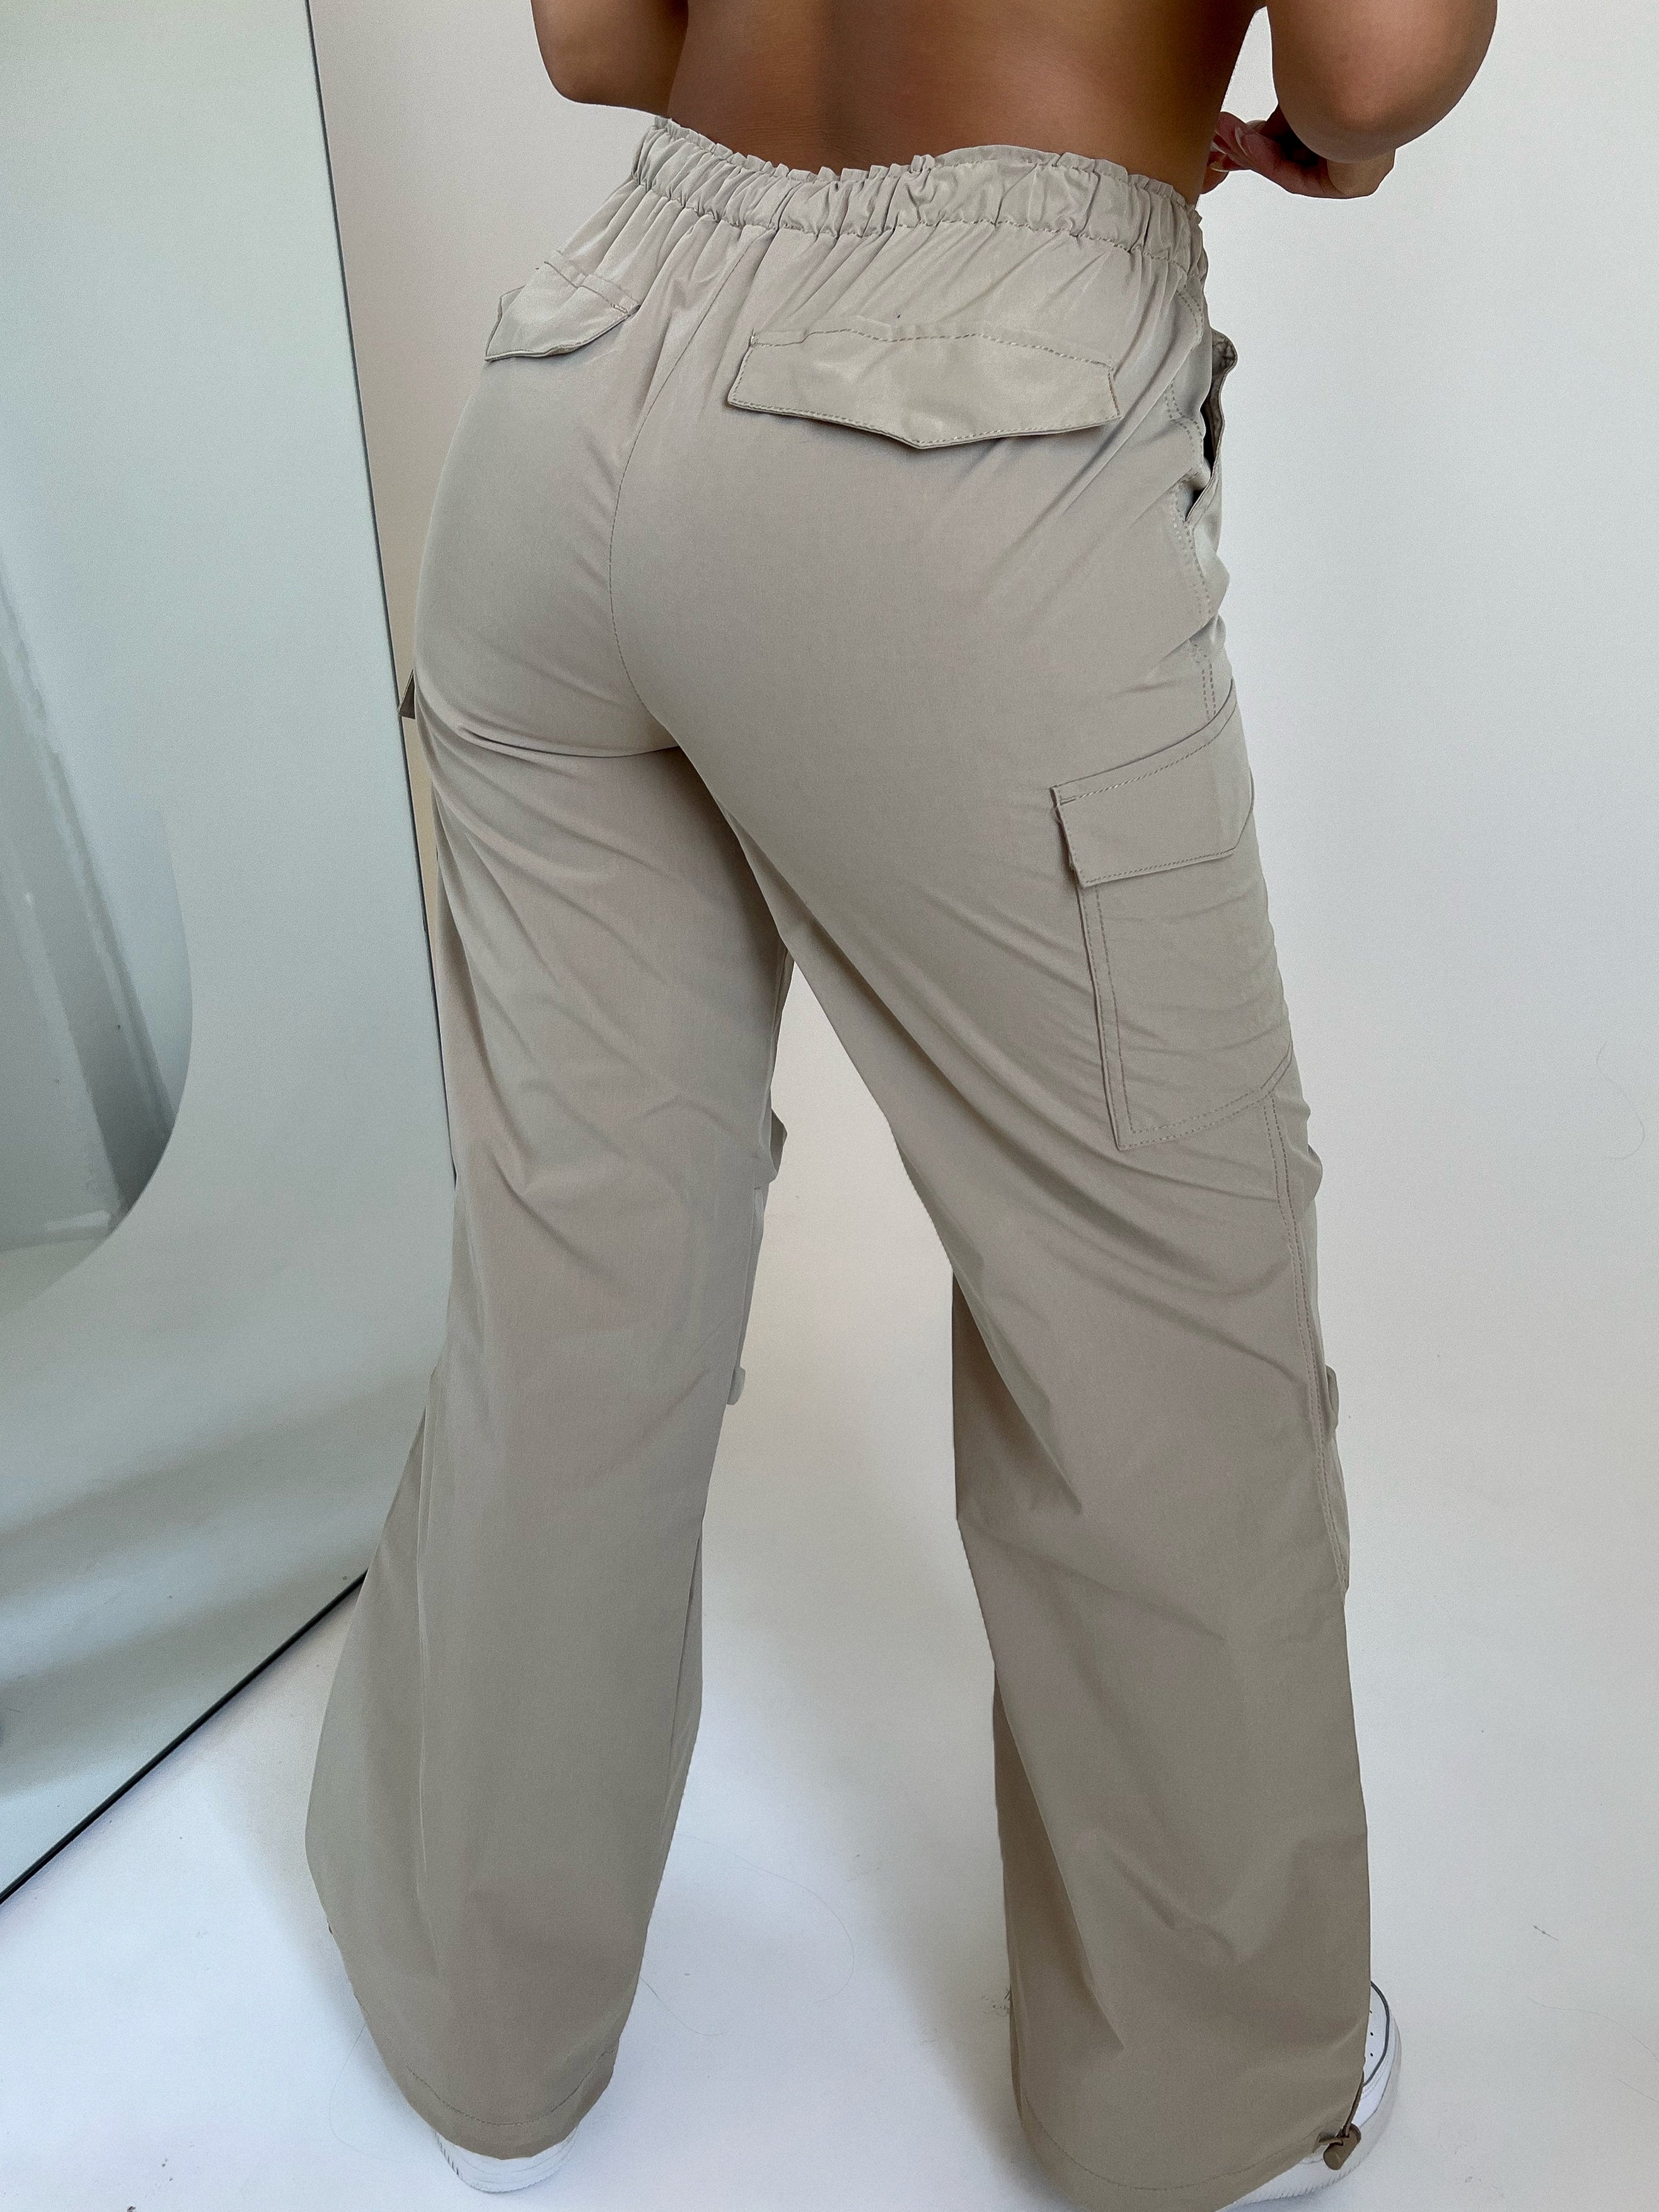 Karen Cargo Pants (Olive) - Laura's Boutique, Inc